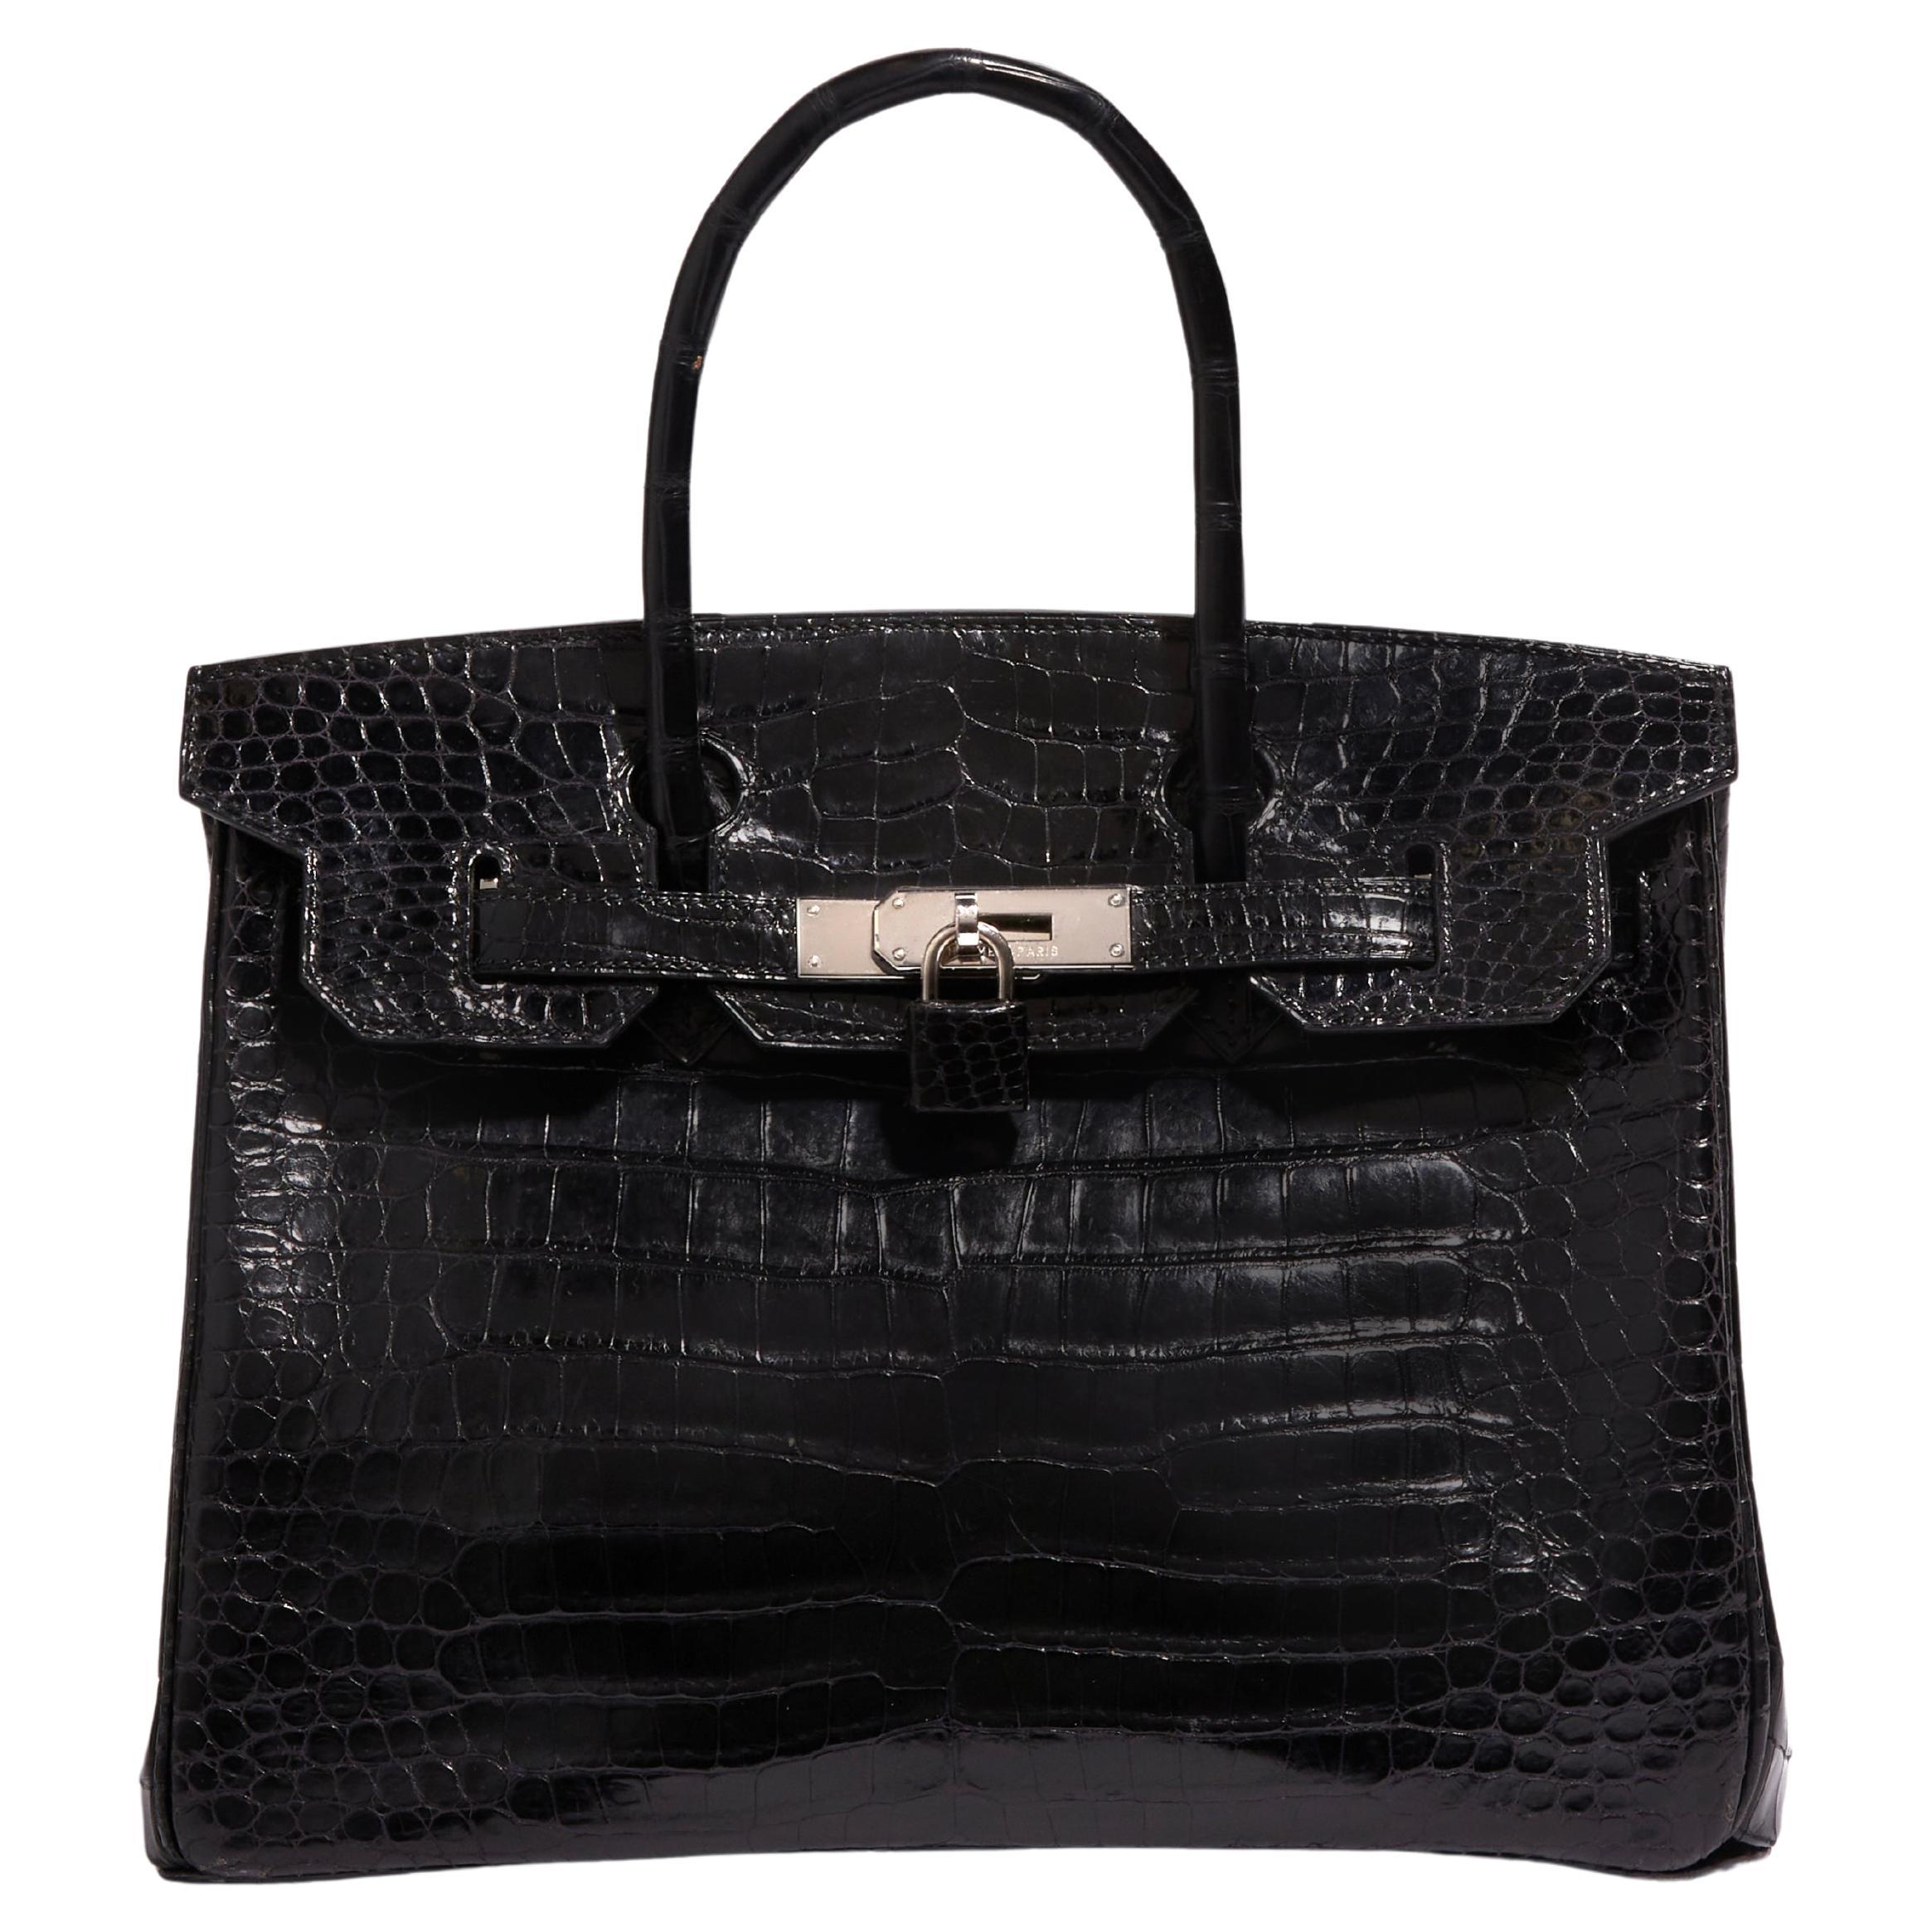 Hermès 30cm Crocodile Birkin Bag With PHW